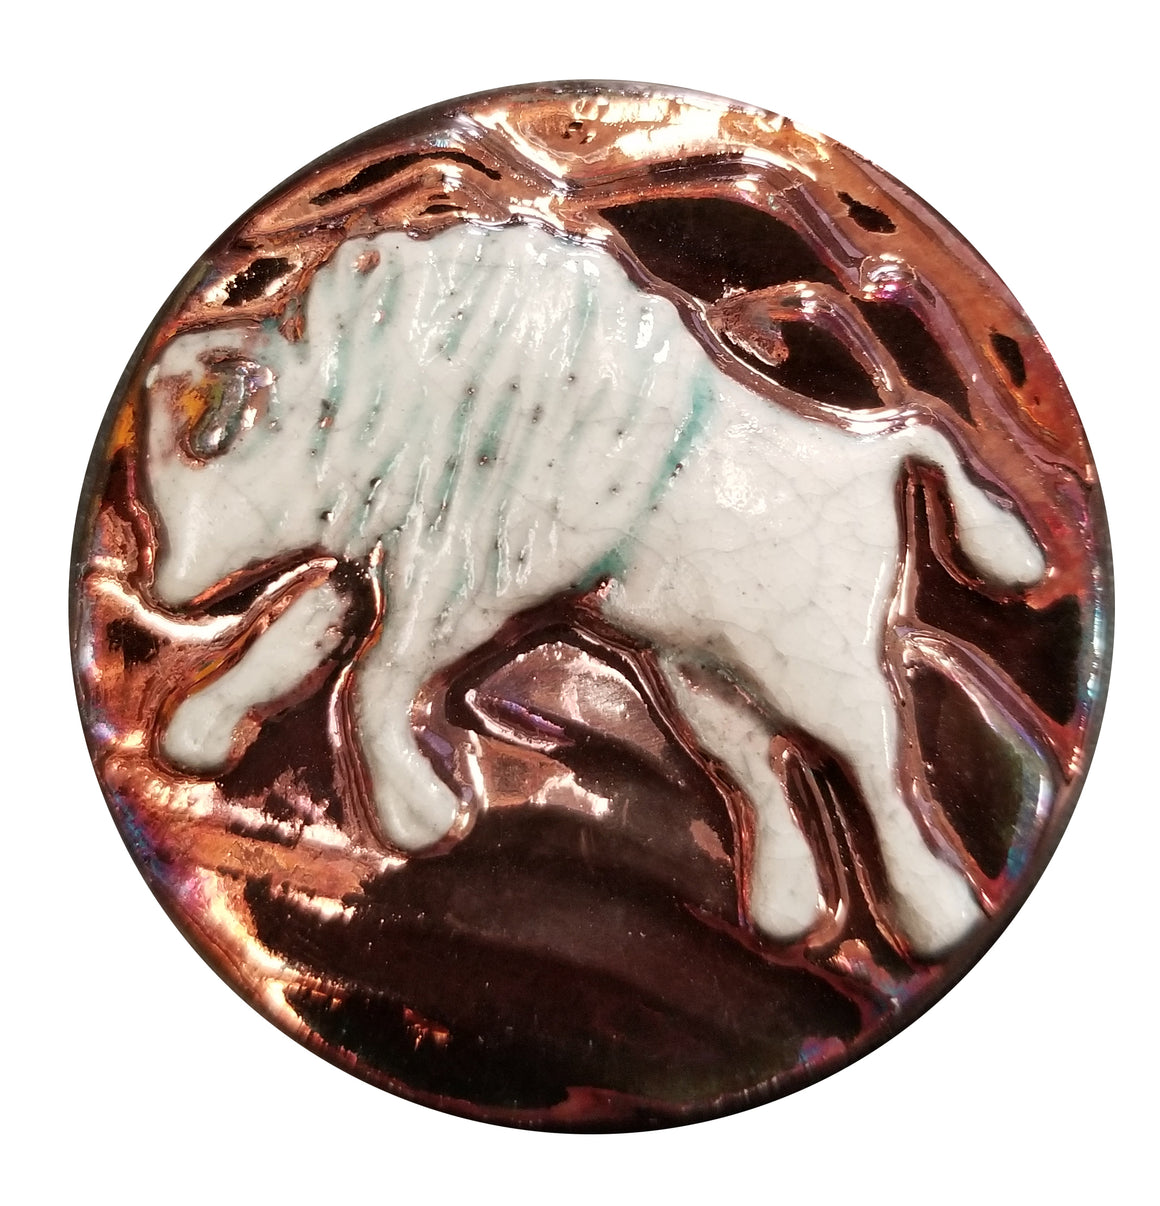 Bison Medallion Magnet from Raku Pottery